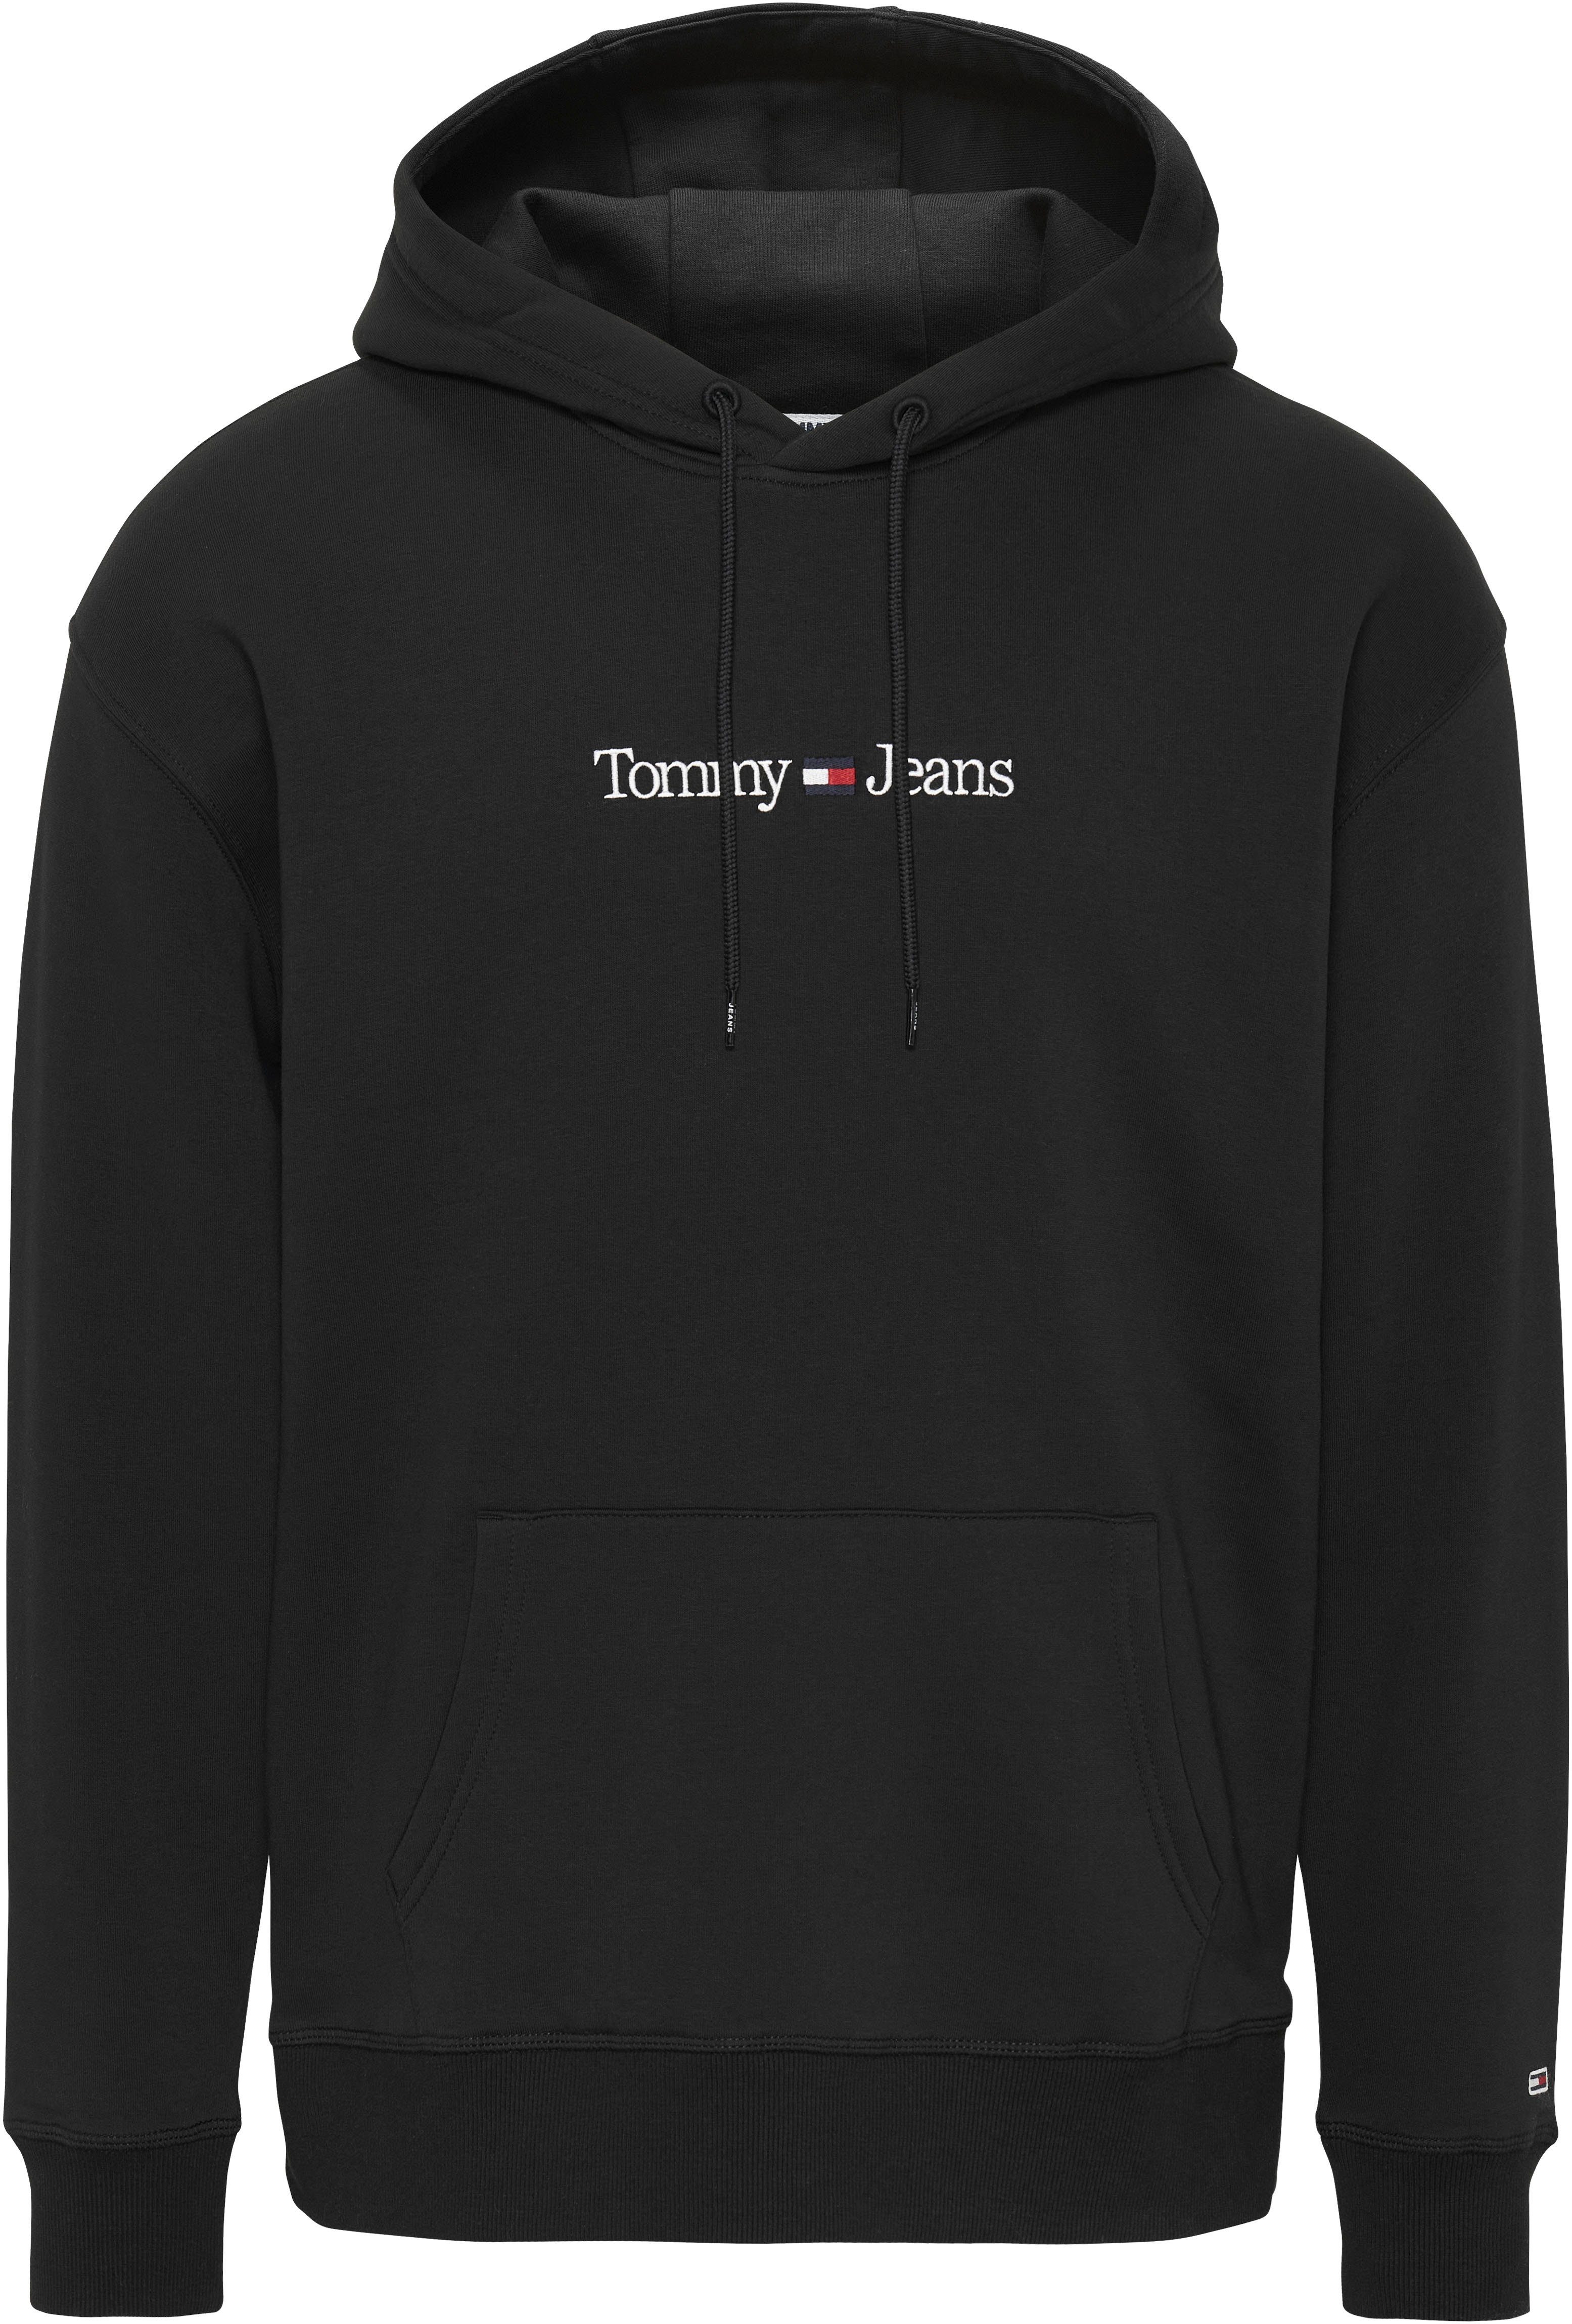 Tommy Jeans Kapuzensweatshirt TJM REG LINEAR HOODIE mit Tommy-Jeans Branding auf der Brust Black